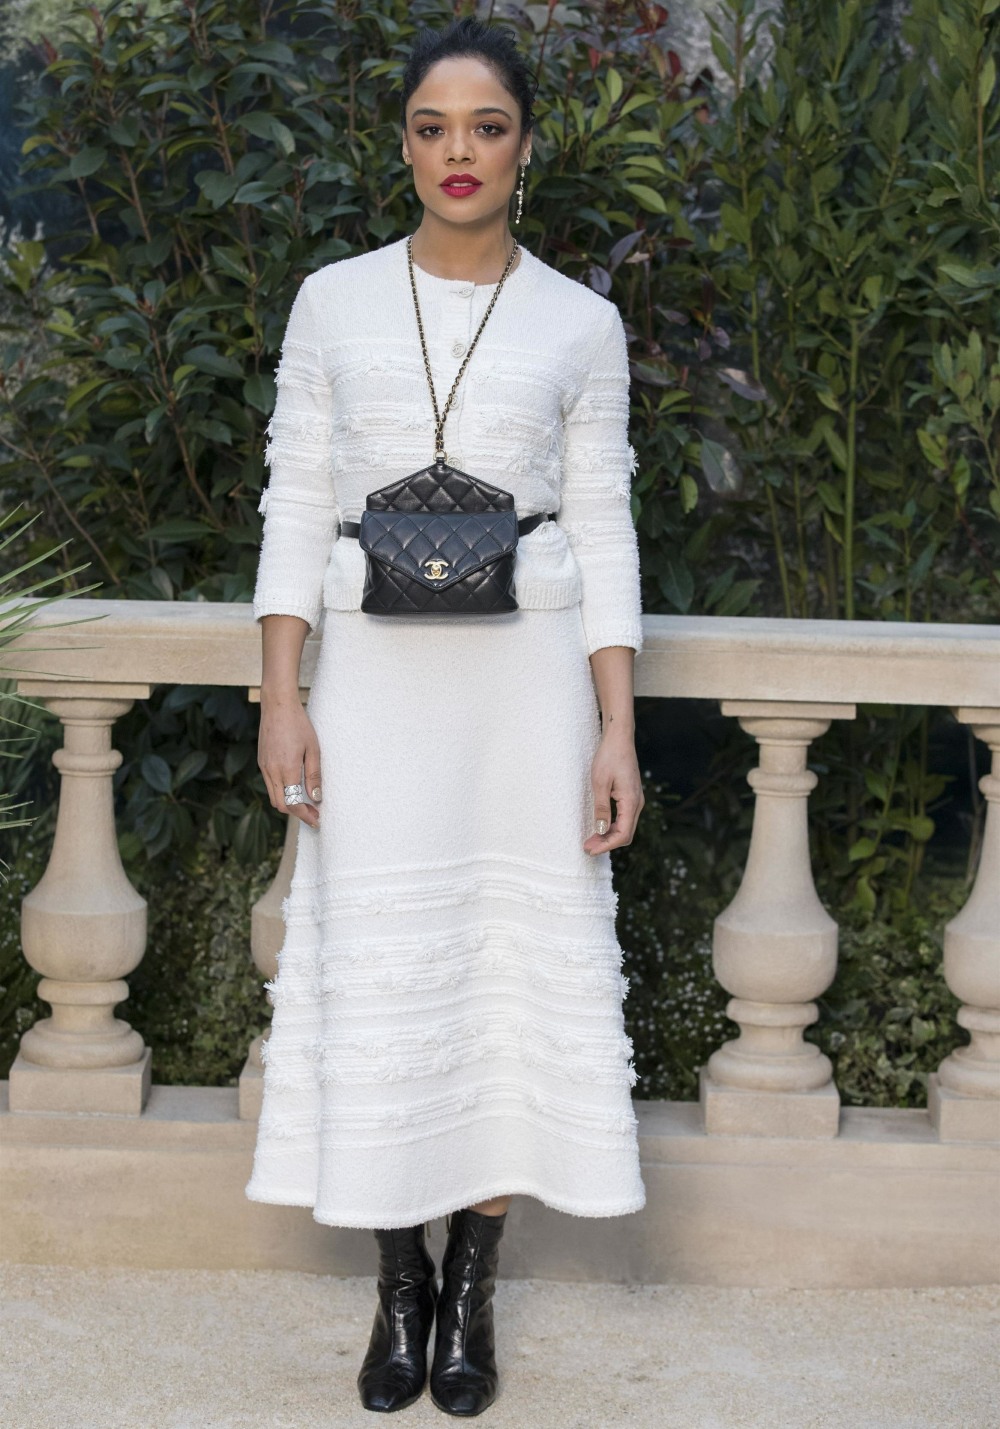 Kristen Stewart joins Tilda Swinton and Tessa Thompson at the Chanel fashion show in Paris